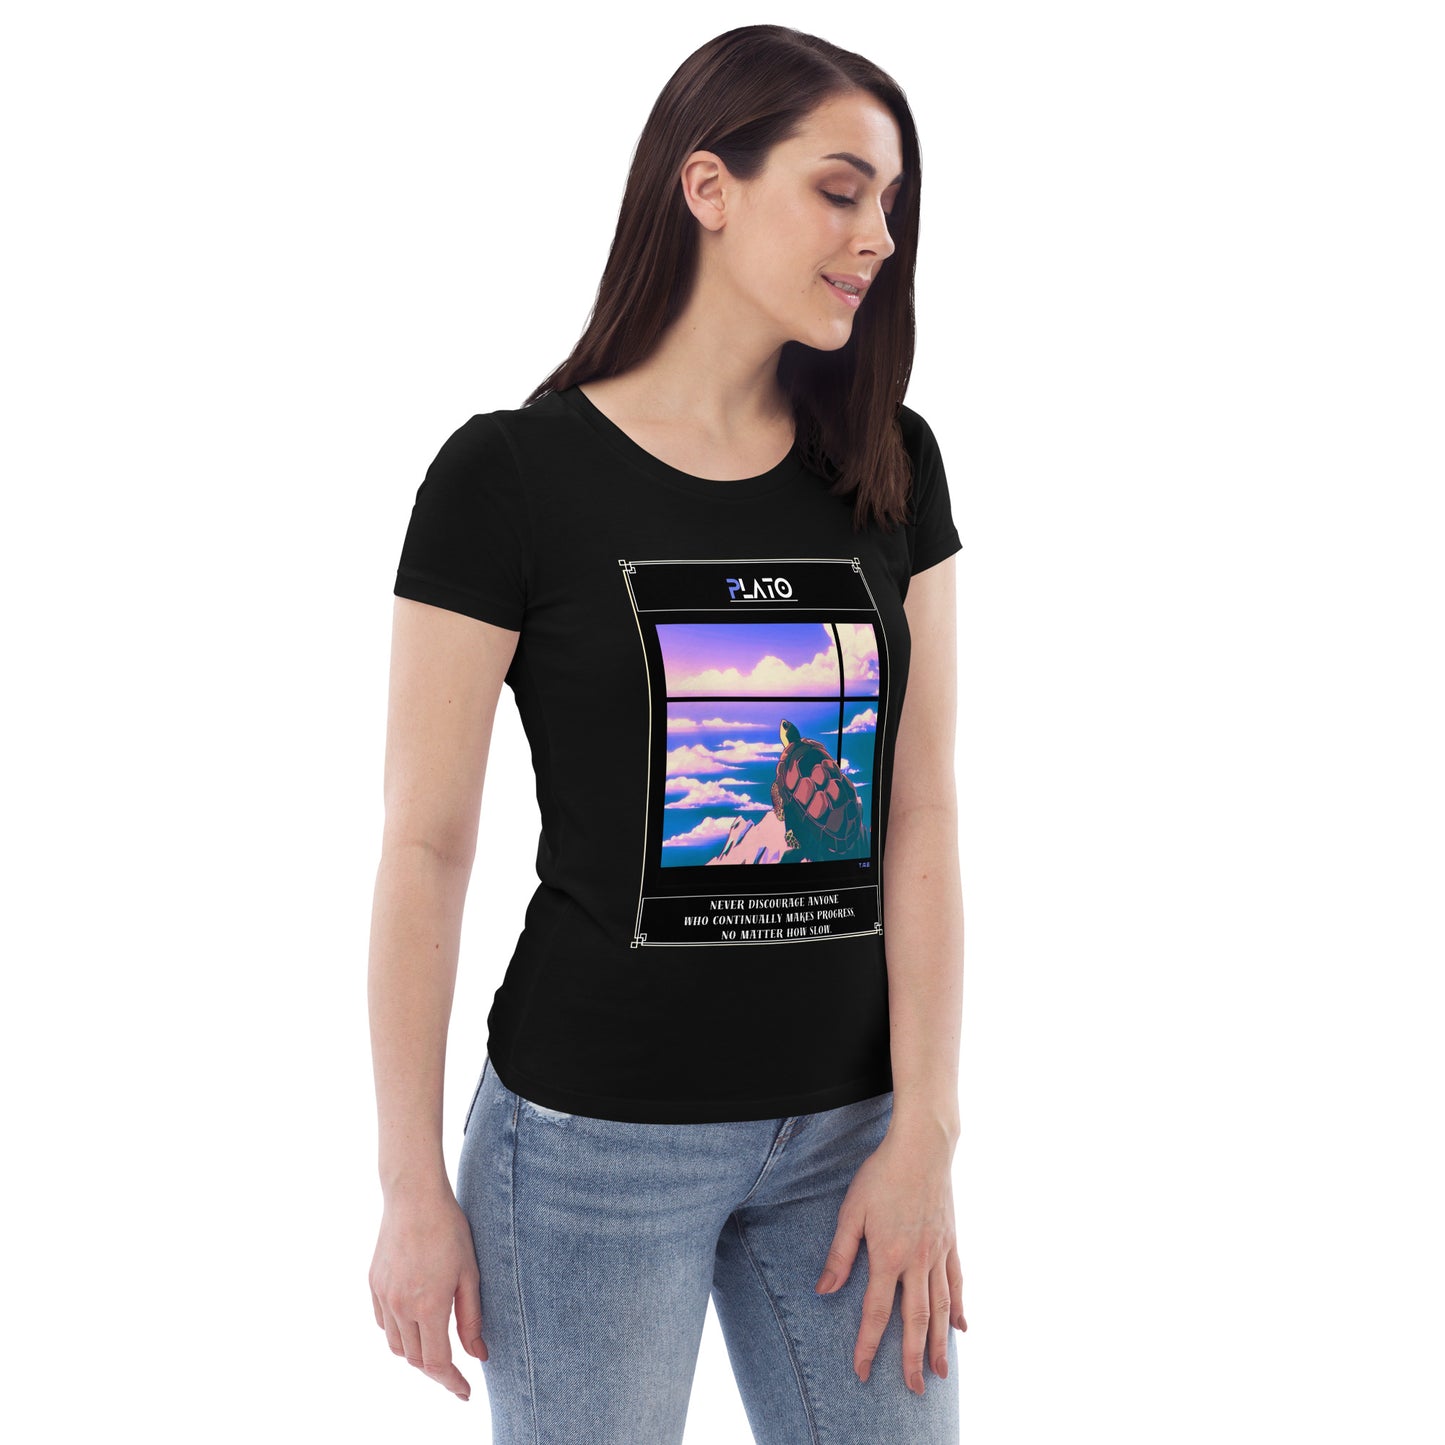 Women's Premium T-Shirt - Plato